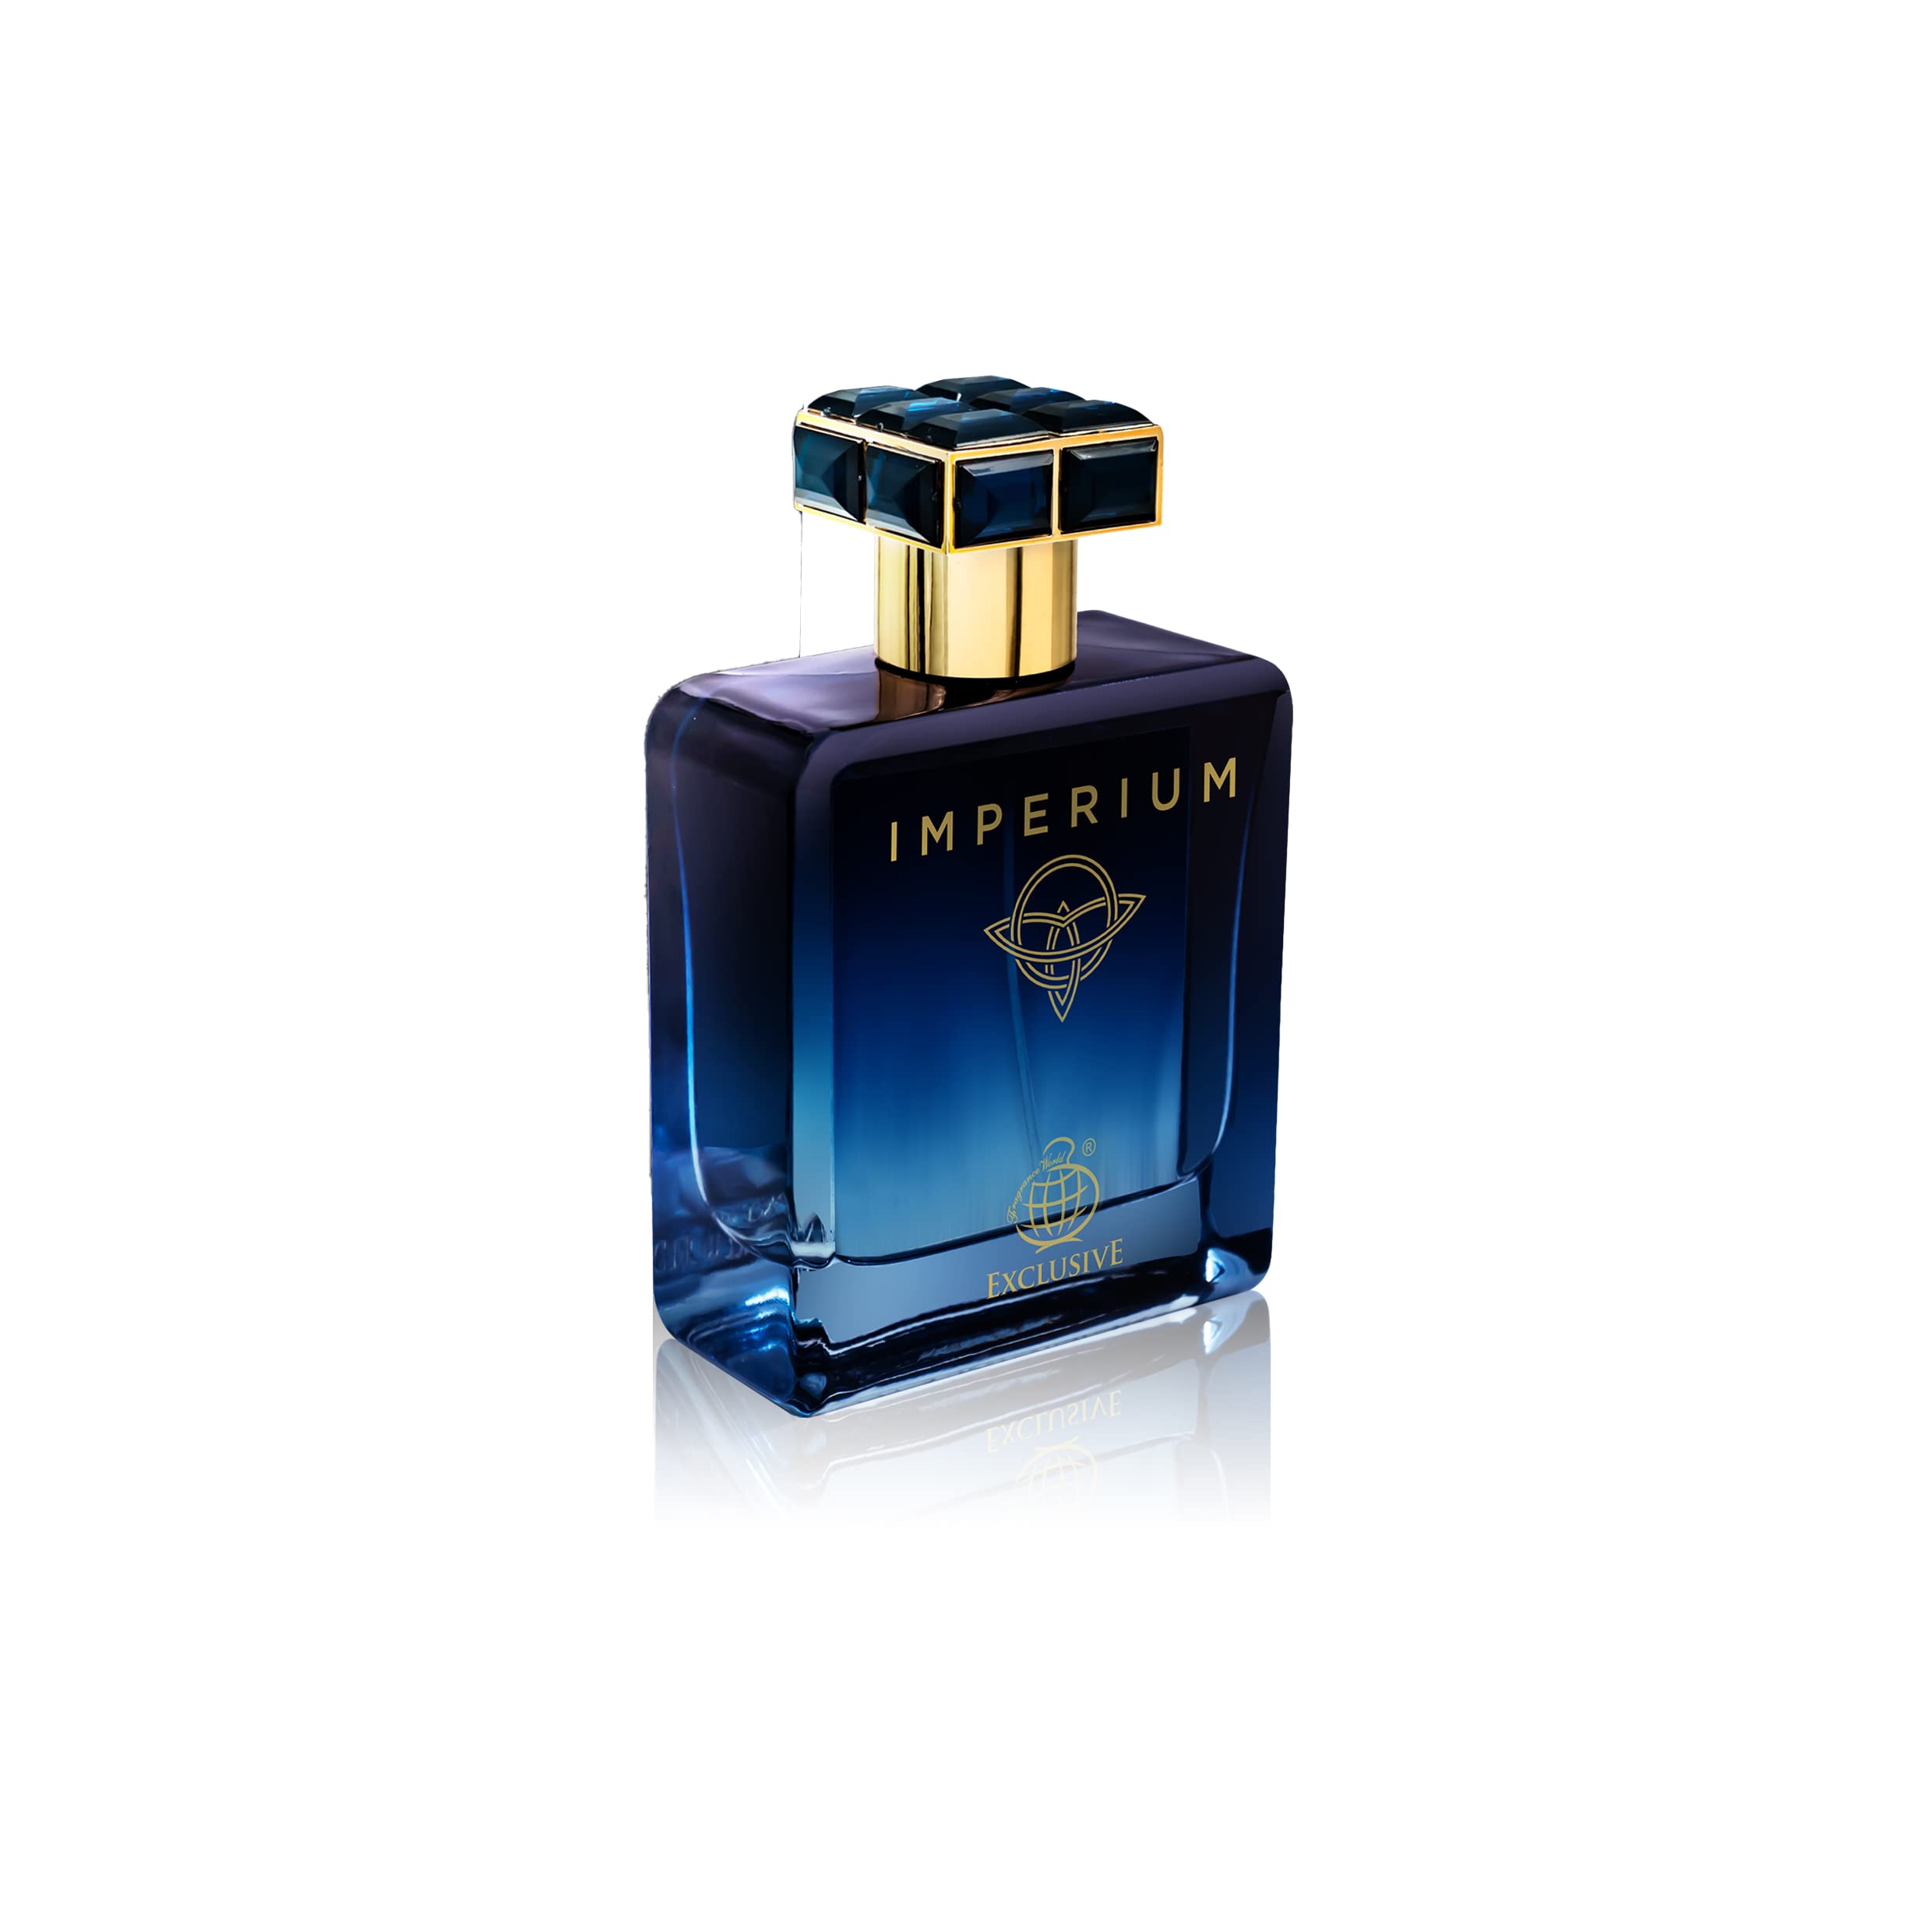 Fragrance World – Imperium EDP Perfume 100 ml Unisex perfume | Aromatic Signature Note Perfumes For Men & Women Exclusive I Luxury Niche Perfume Made in UAE